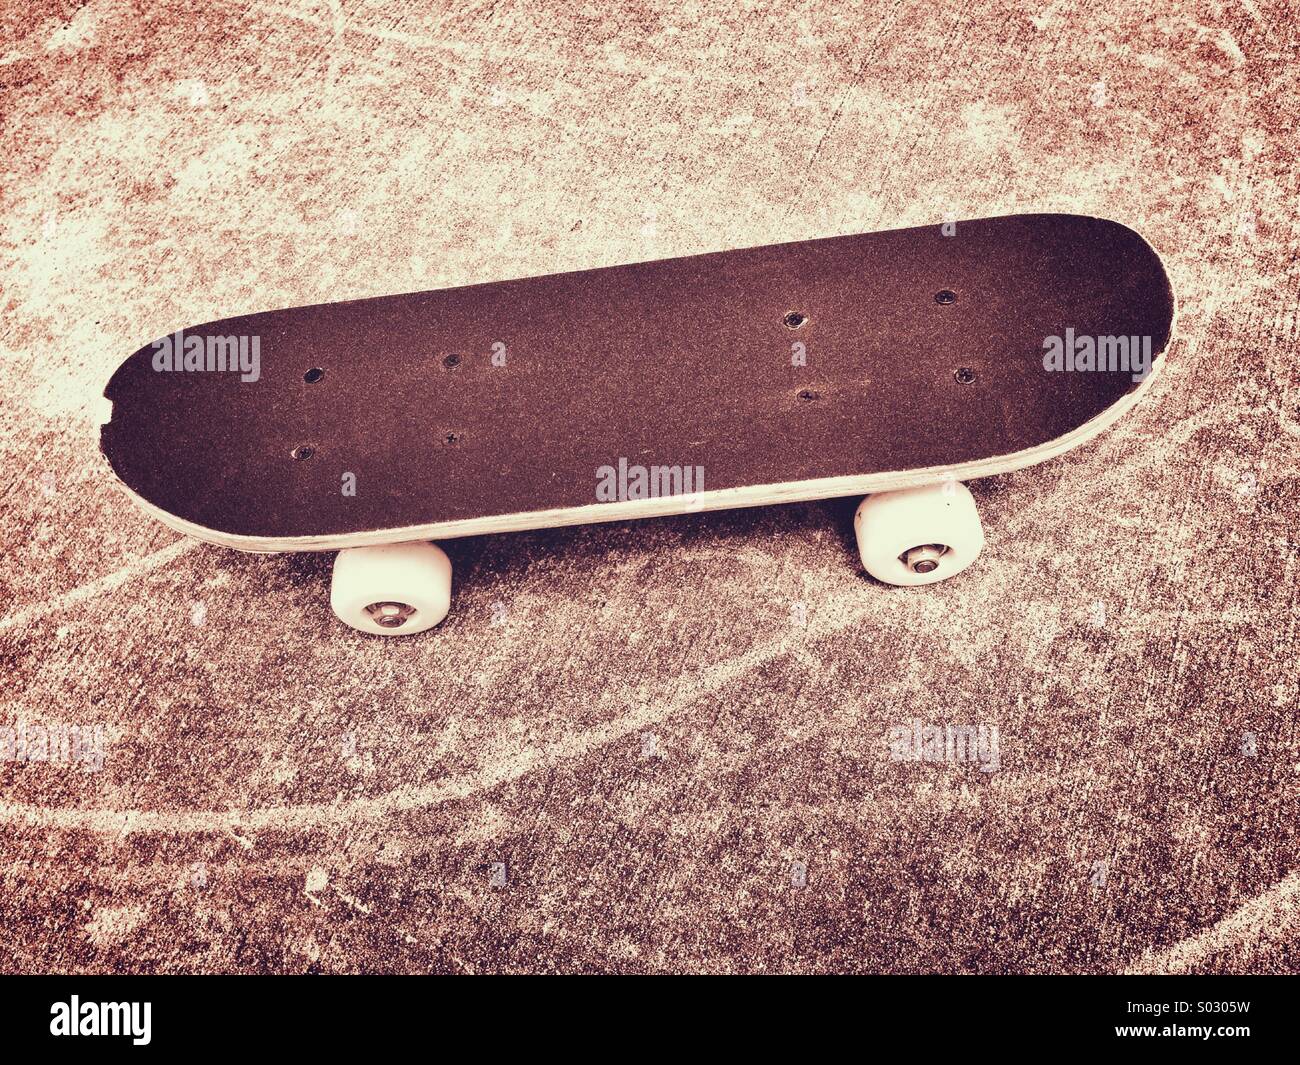 Skateboard Stock Photo